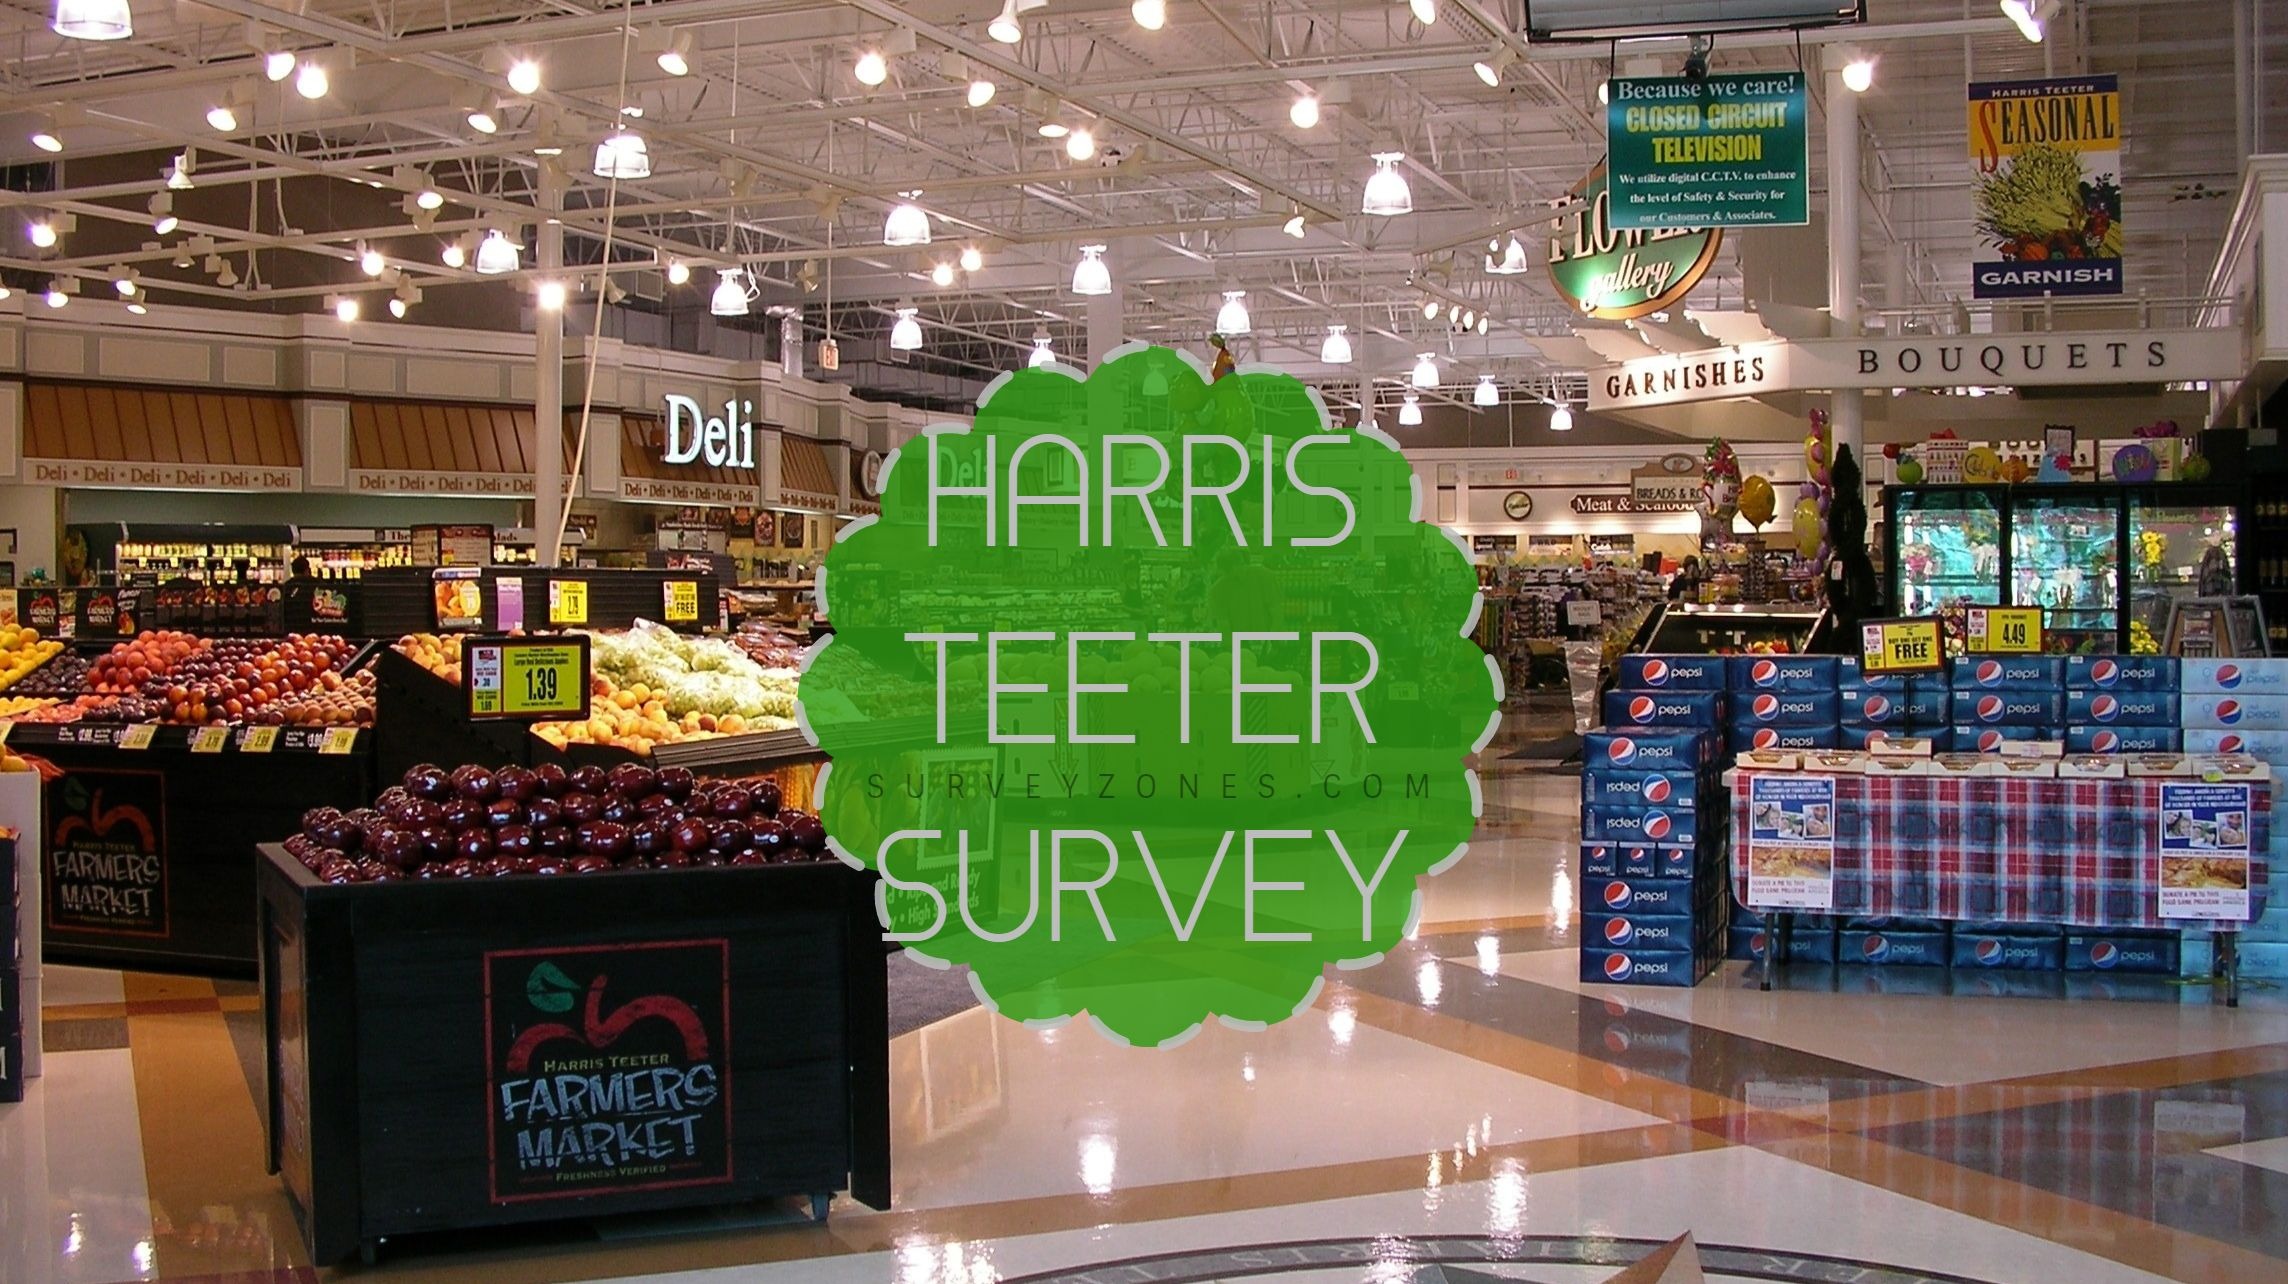 Harris Teeter Survey